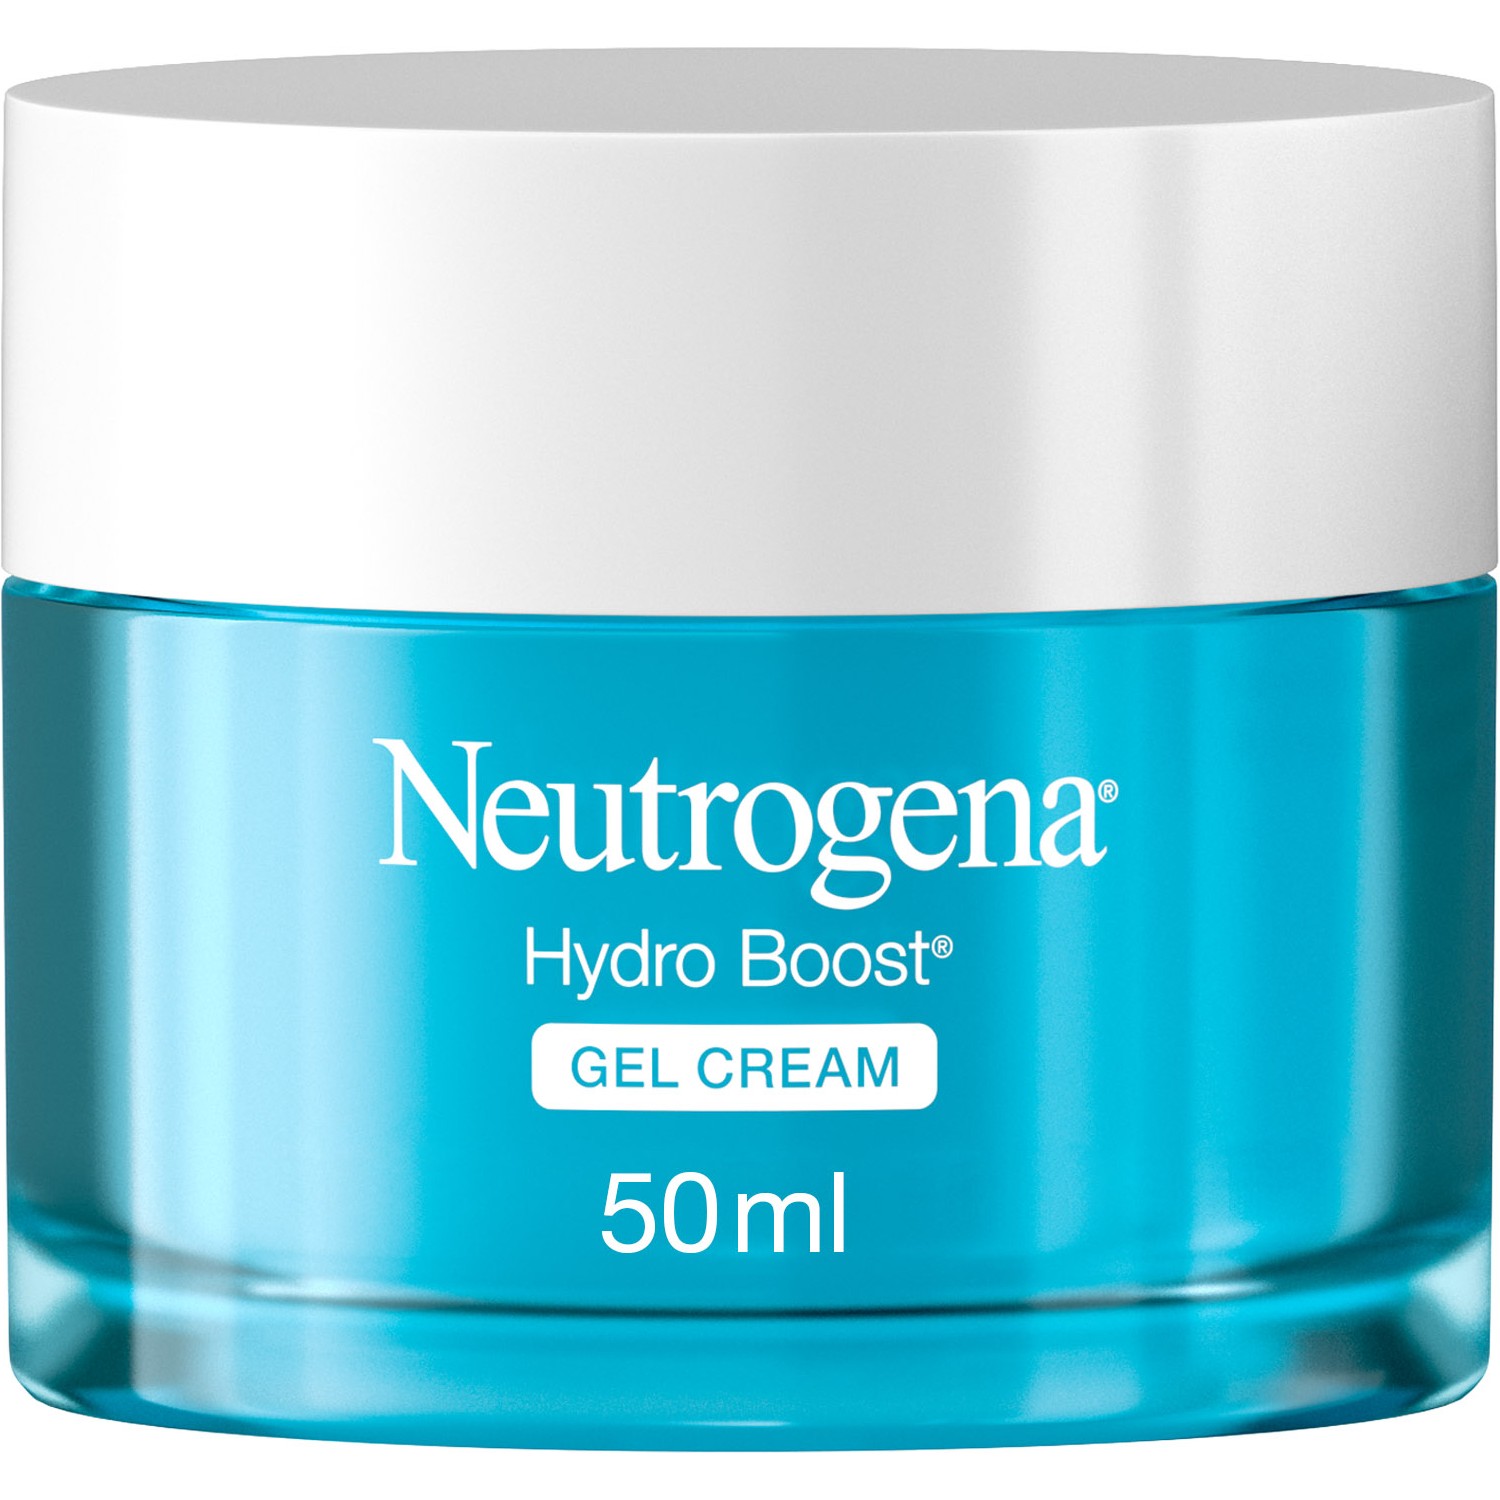 Крем-гель Neutrogena Hydro Boost увлажняющий для сухой кожи, 50 мл цена и фото